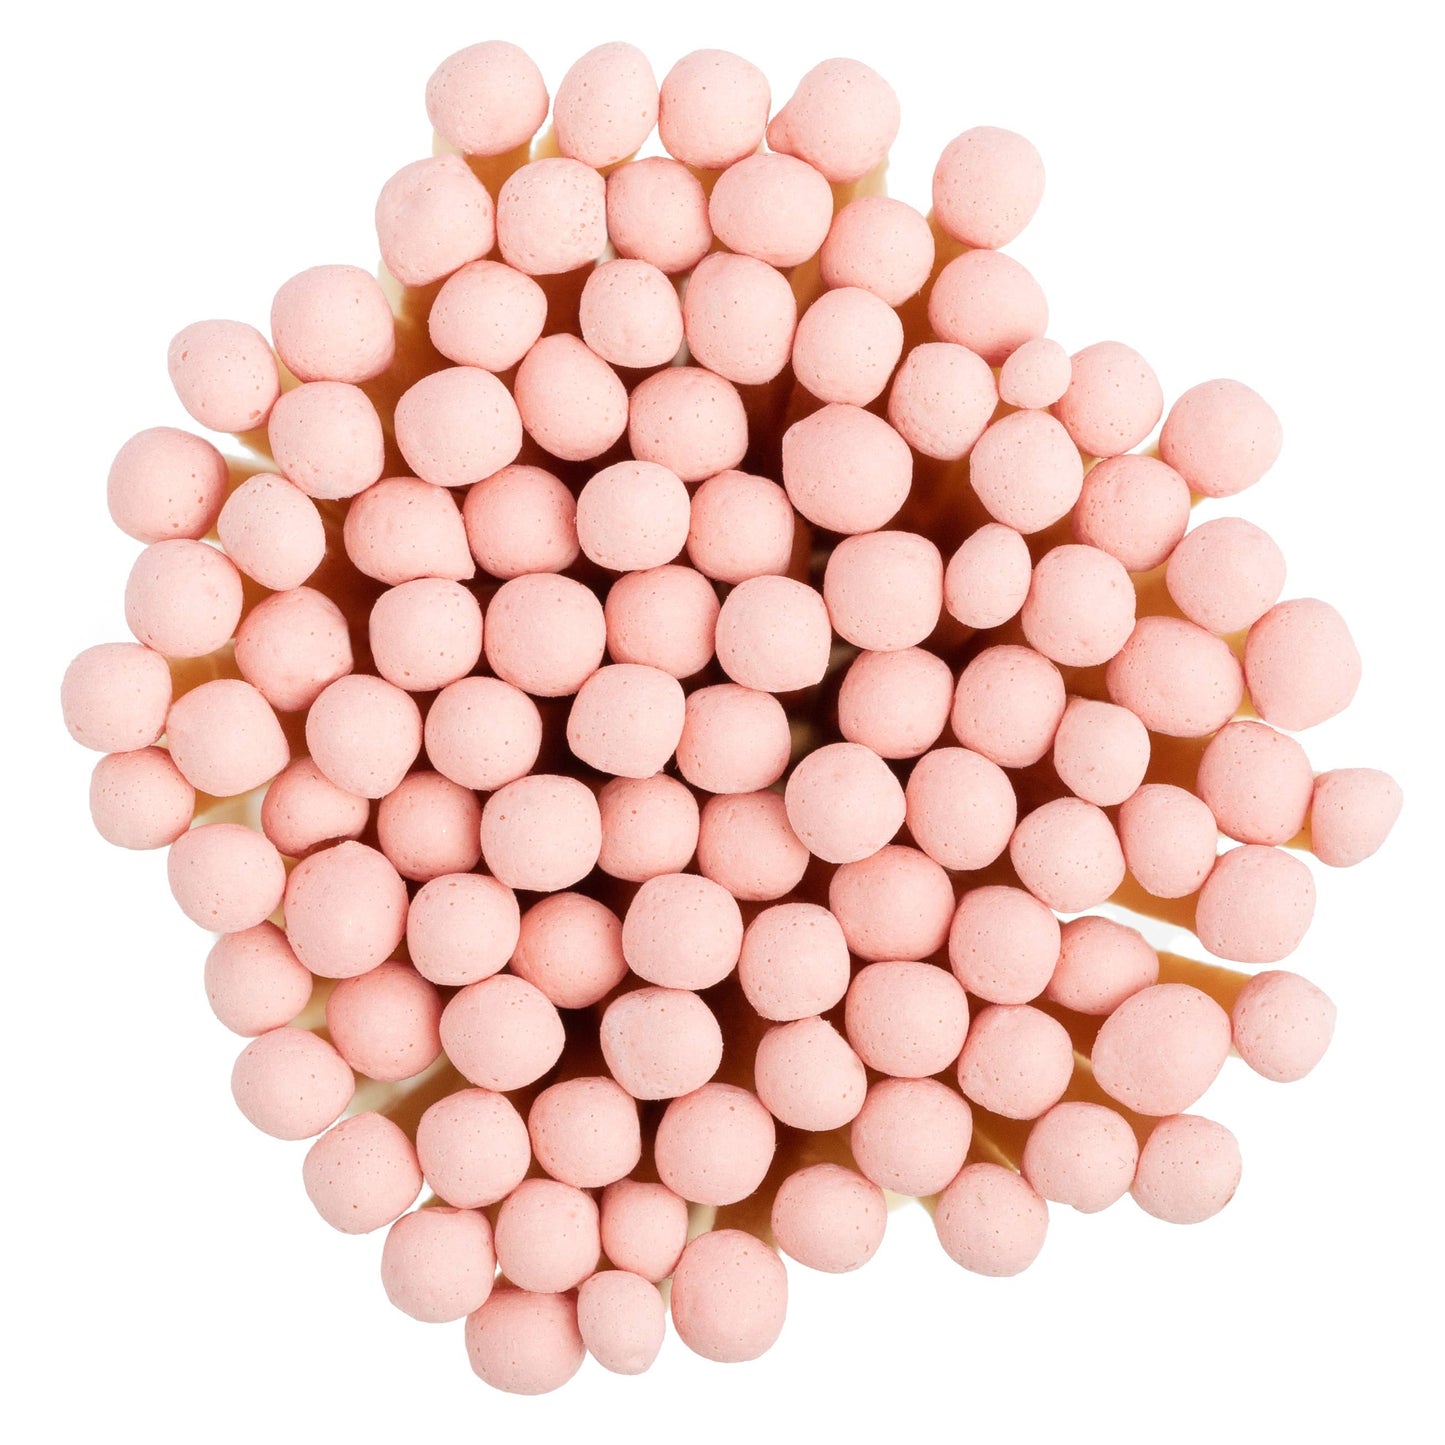 White Round Vessel with Baby Pink Matchsticks